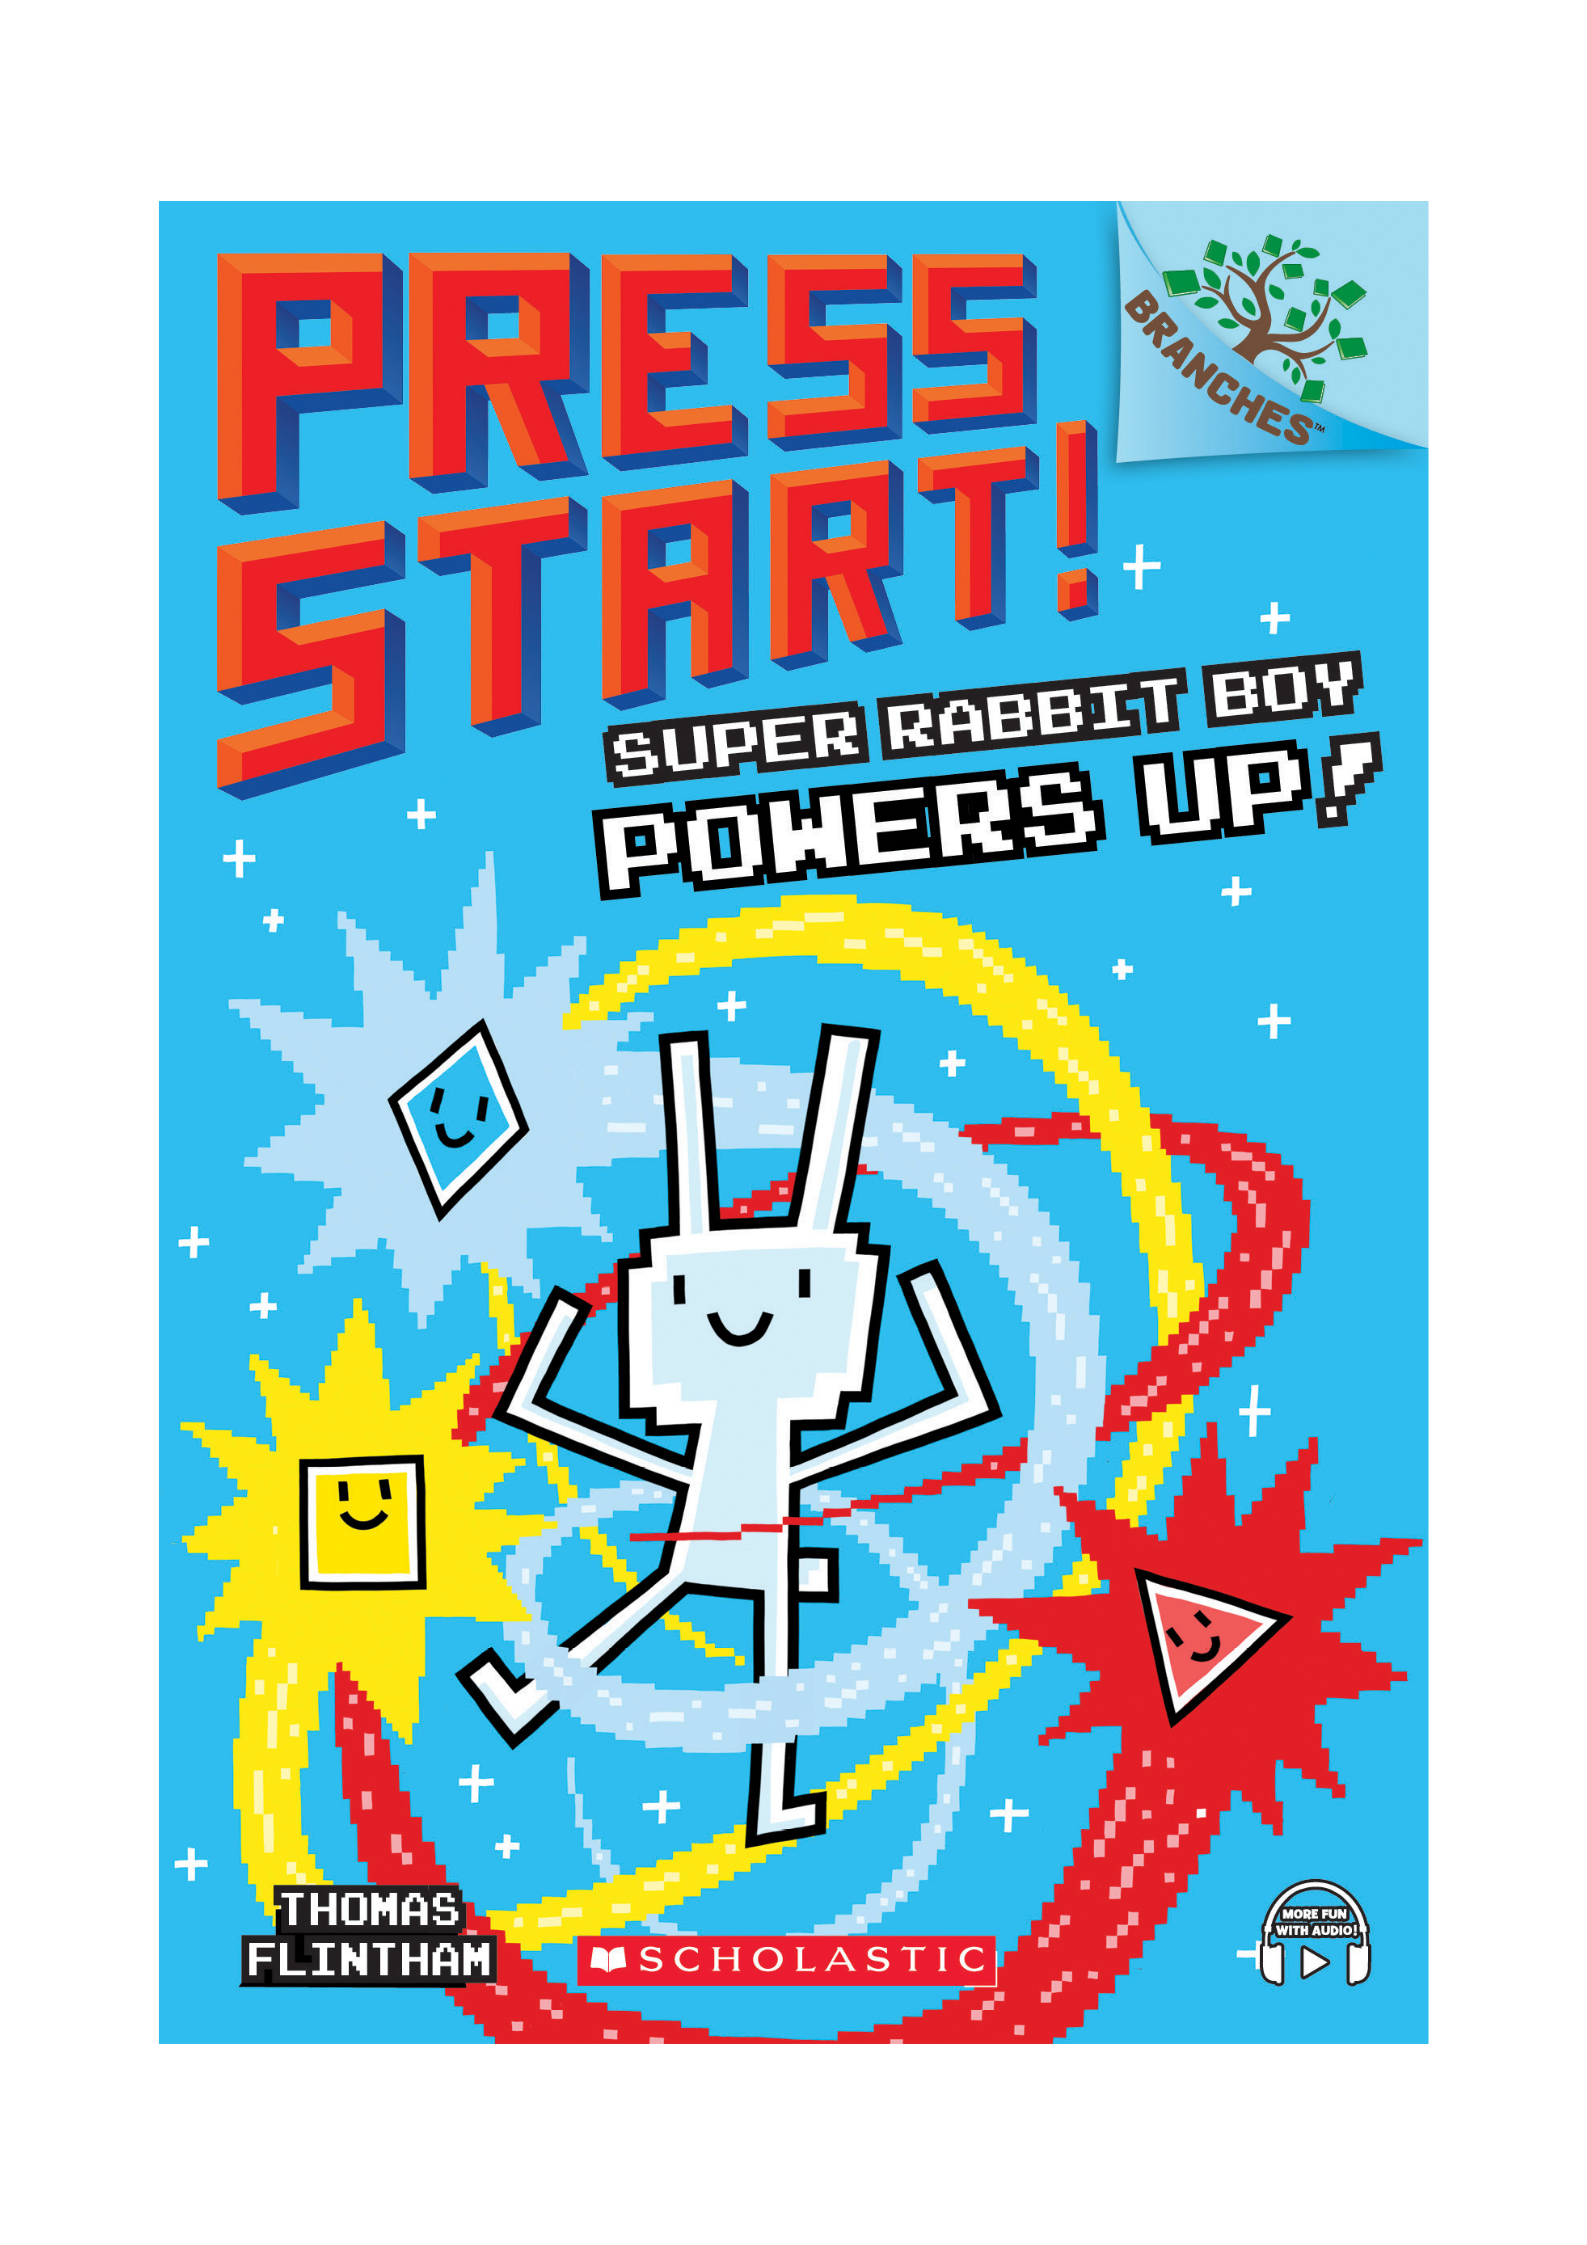 Press Start! #2: Super Rabbit Boy Powers Up!